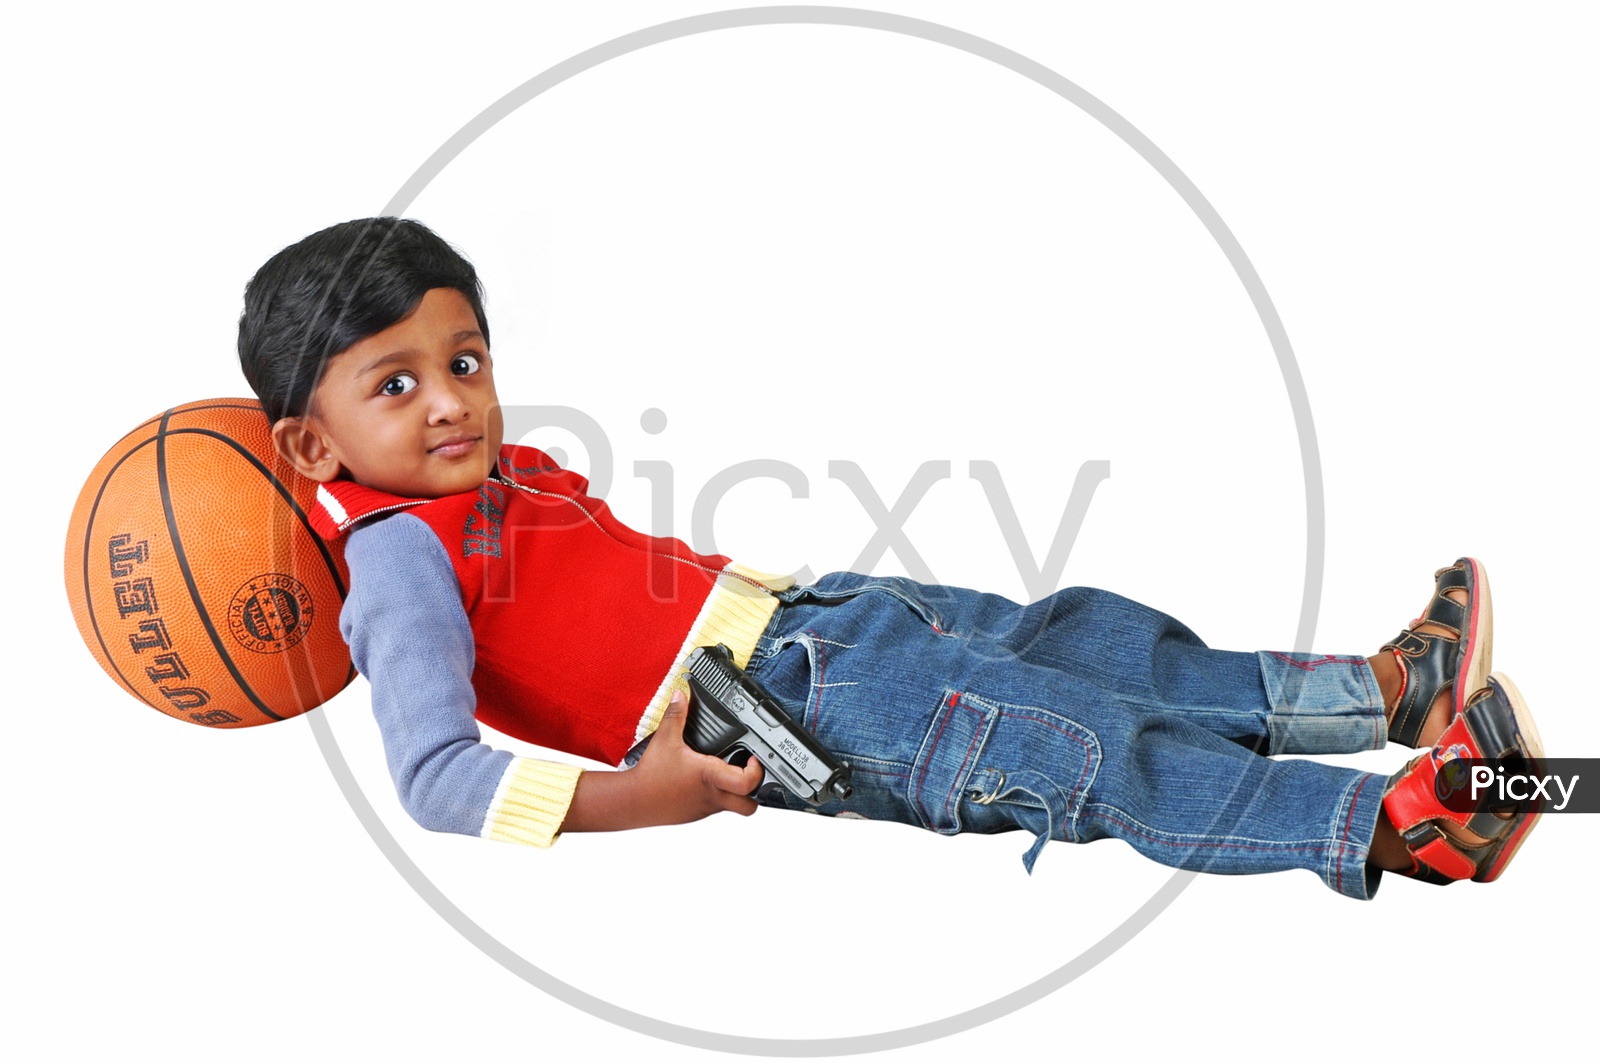 Indian boy holding a revolver